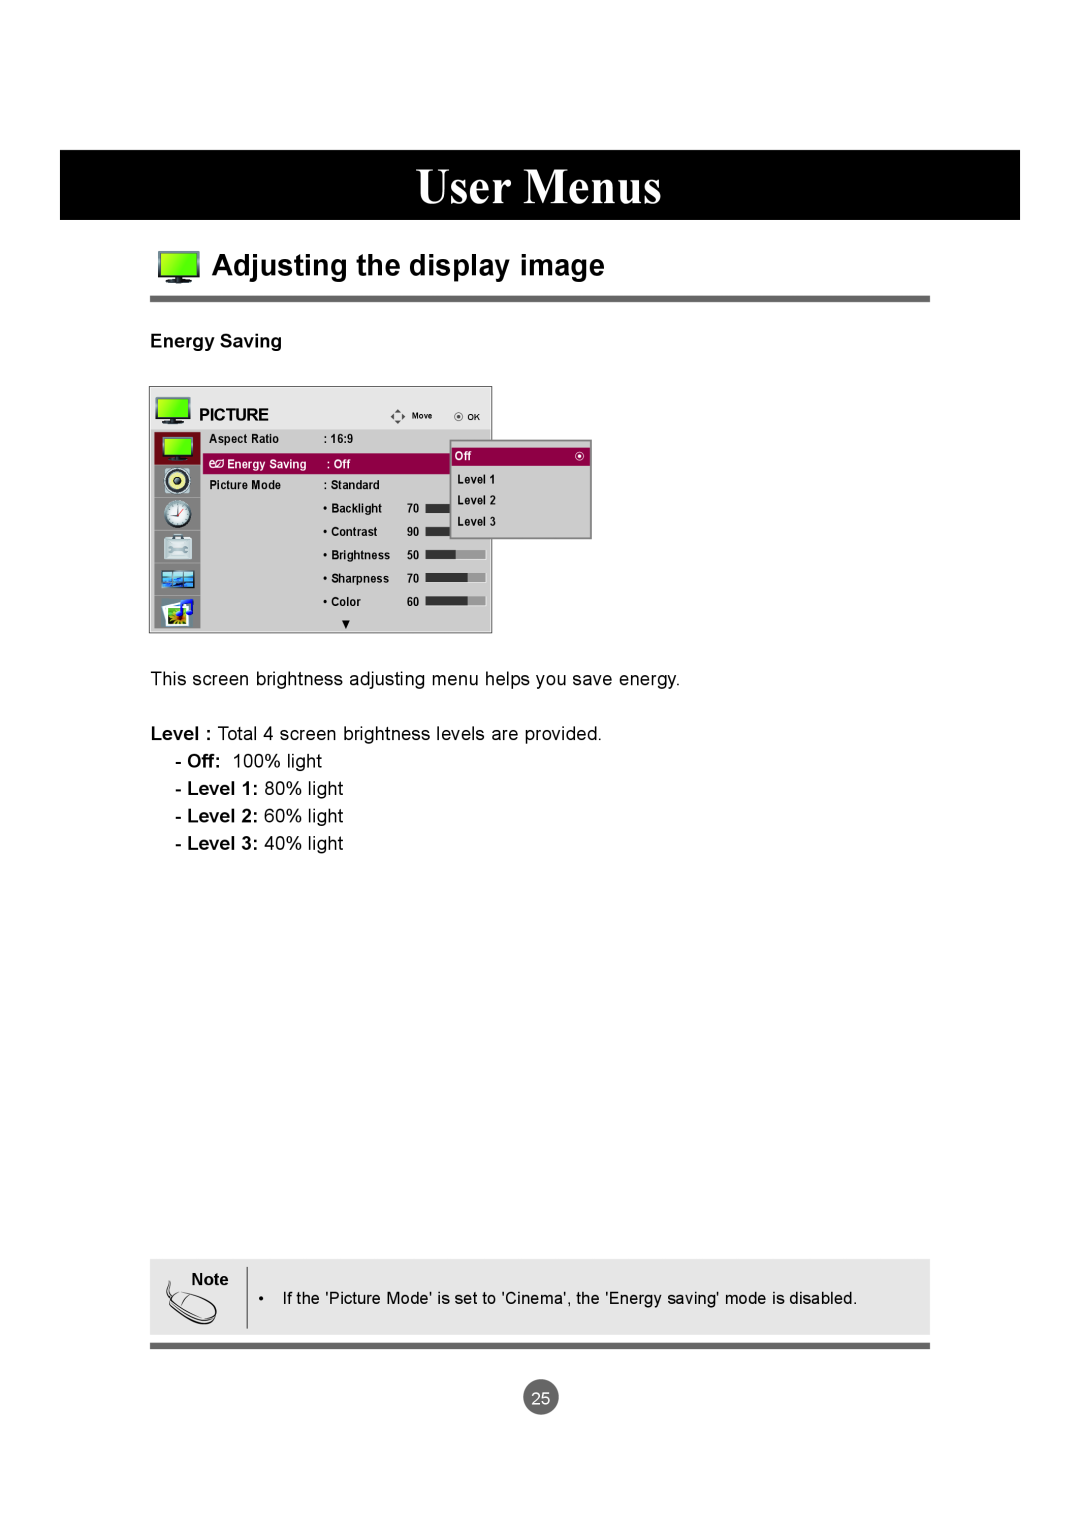 LG Electronics M5520C, M4720C owner manual User Menus, Adjusting the display image, Energy Saving, Picture 